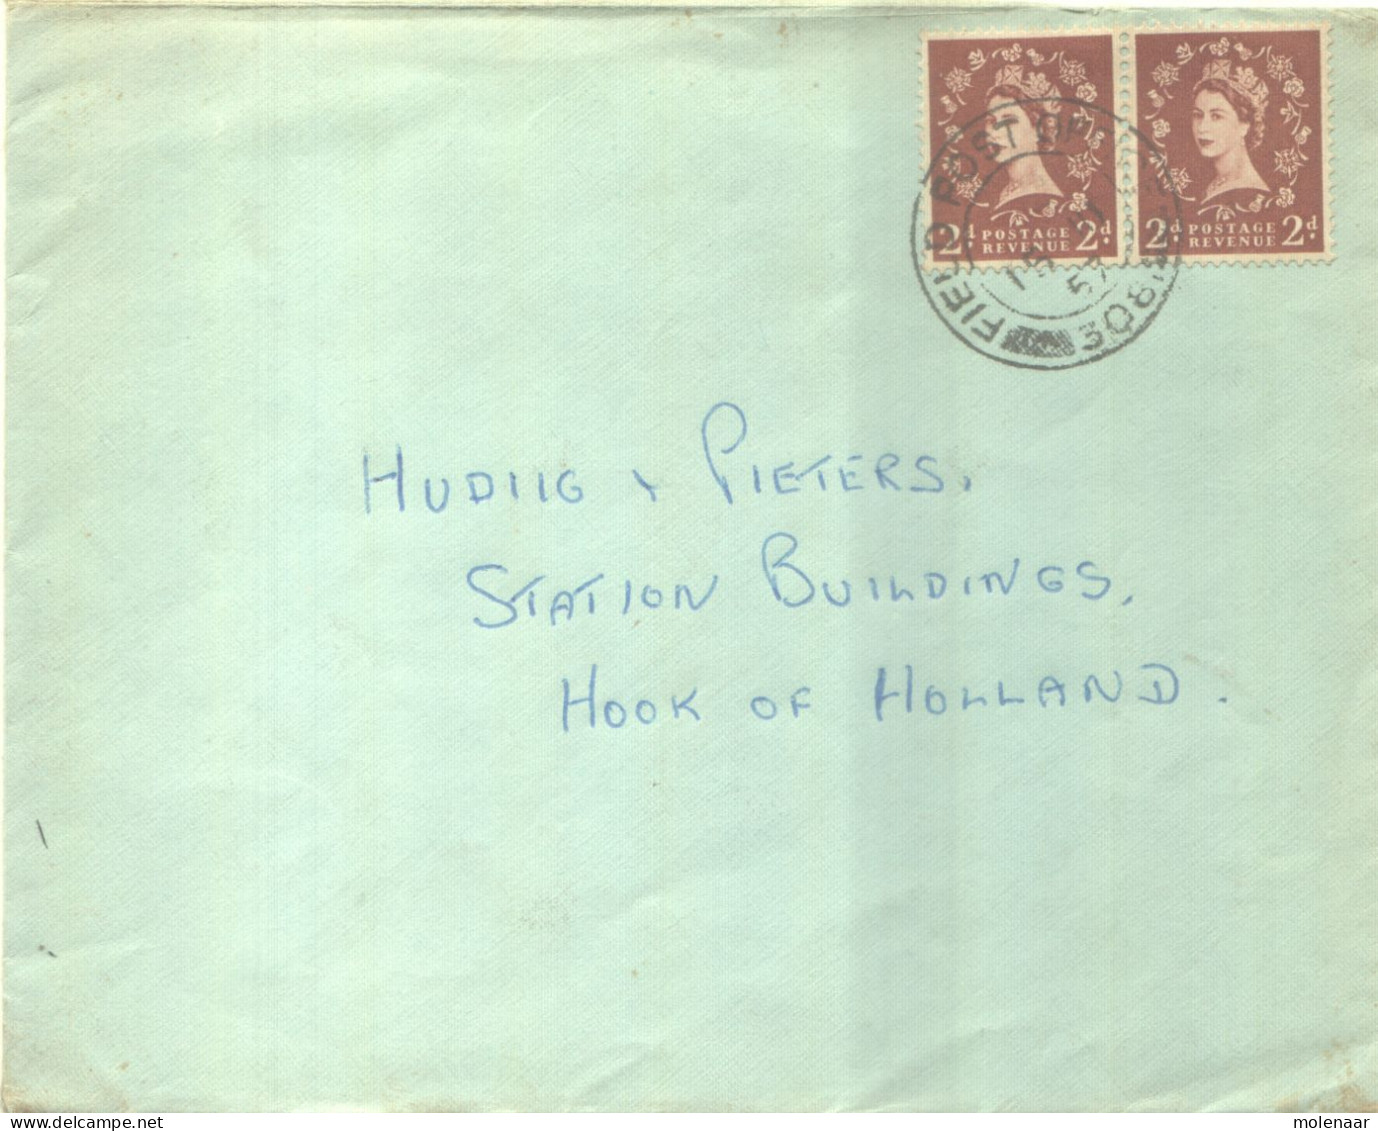 Postzegels > Europa > Groot-Brittannië > 1952-2022 Elizabeth II > 1971-1980  > Brief Met 2 Postzegels (16814) - Lettres & Documents